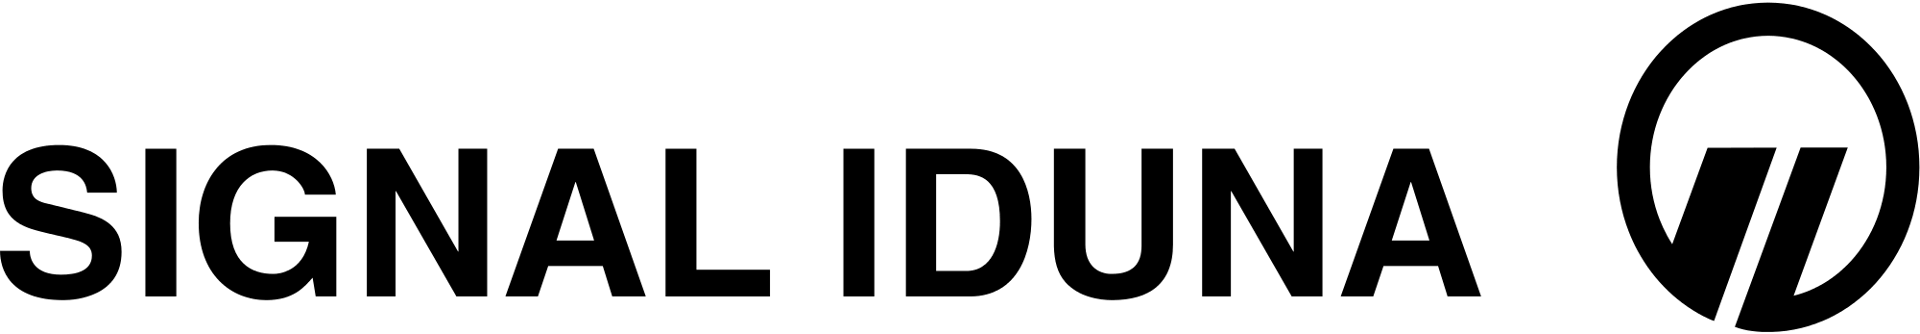 black logo signal iduna